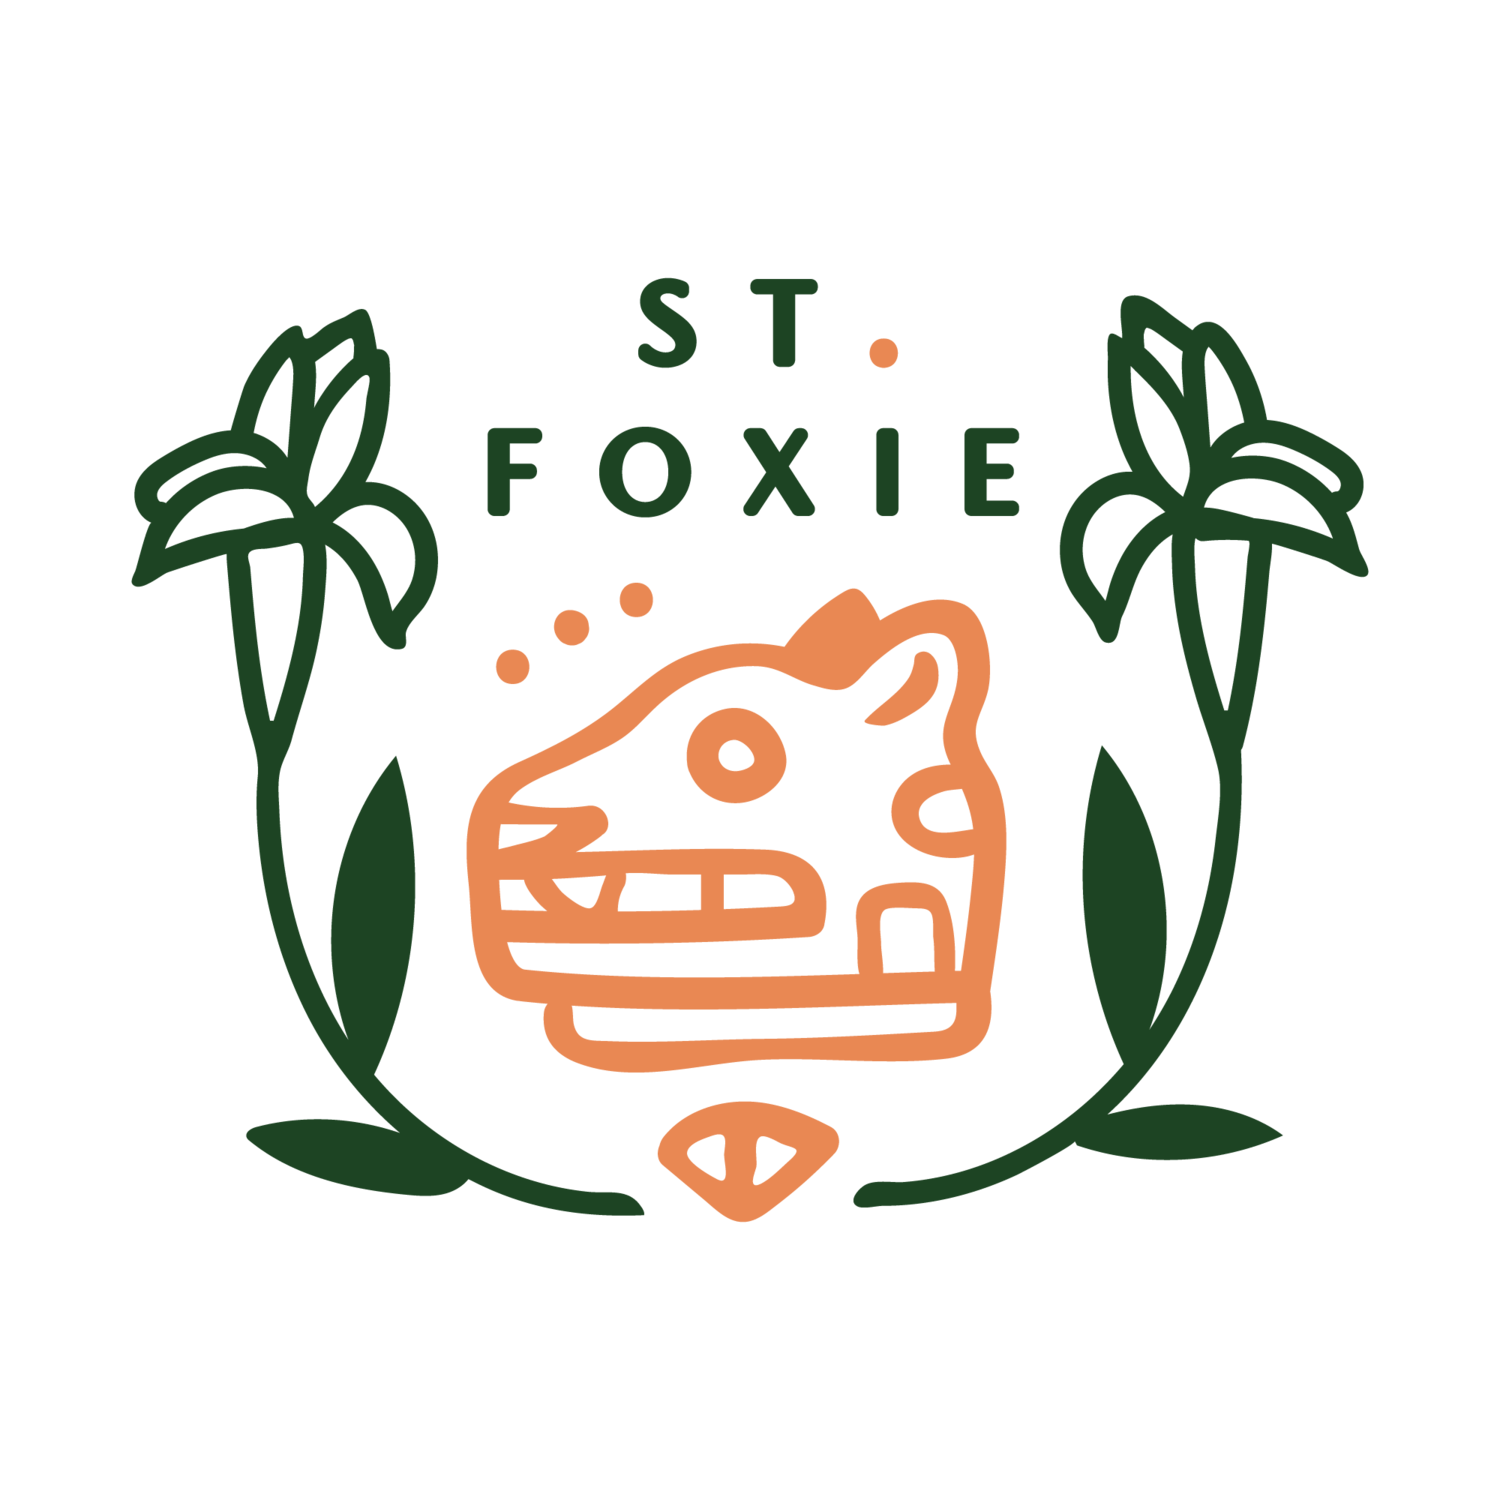 st. foxie